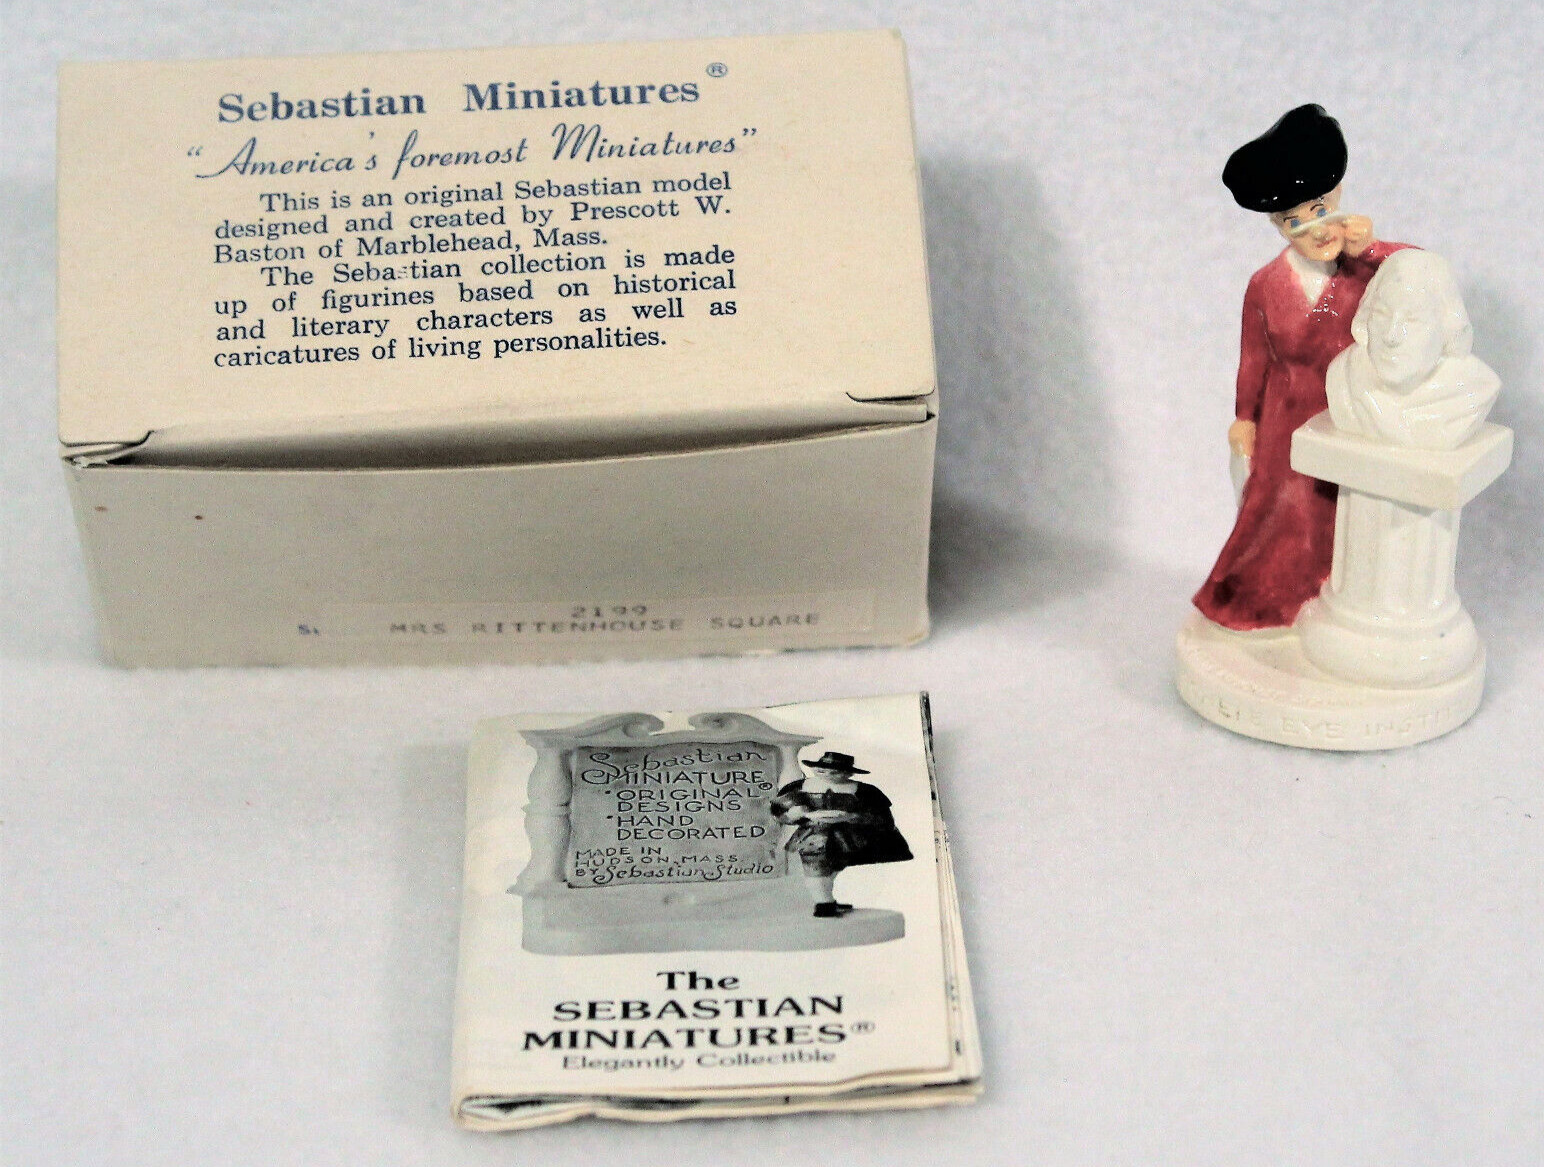 Vintage Sebastian Miniatures #2199 Mrs. Rittenhouse Square Original Box Sticker